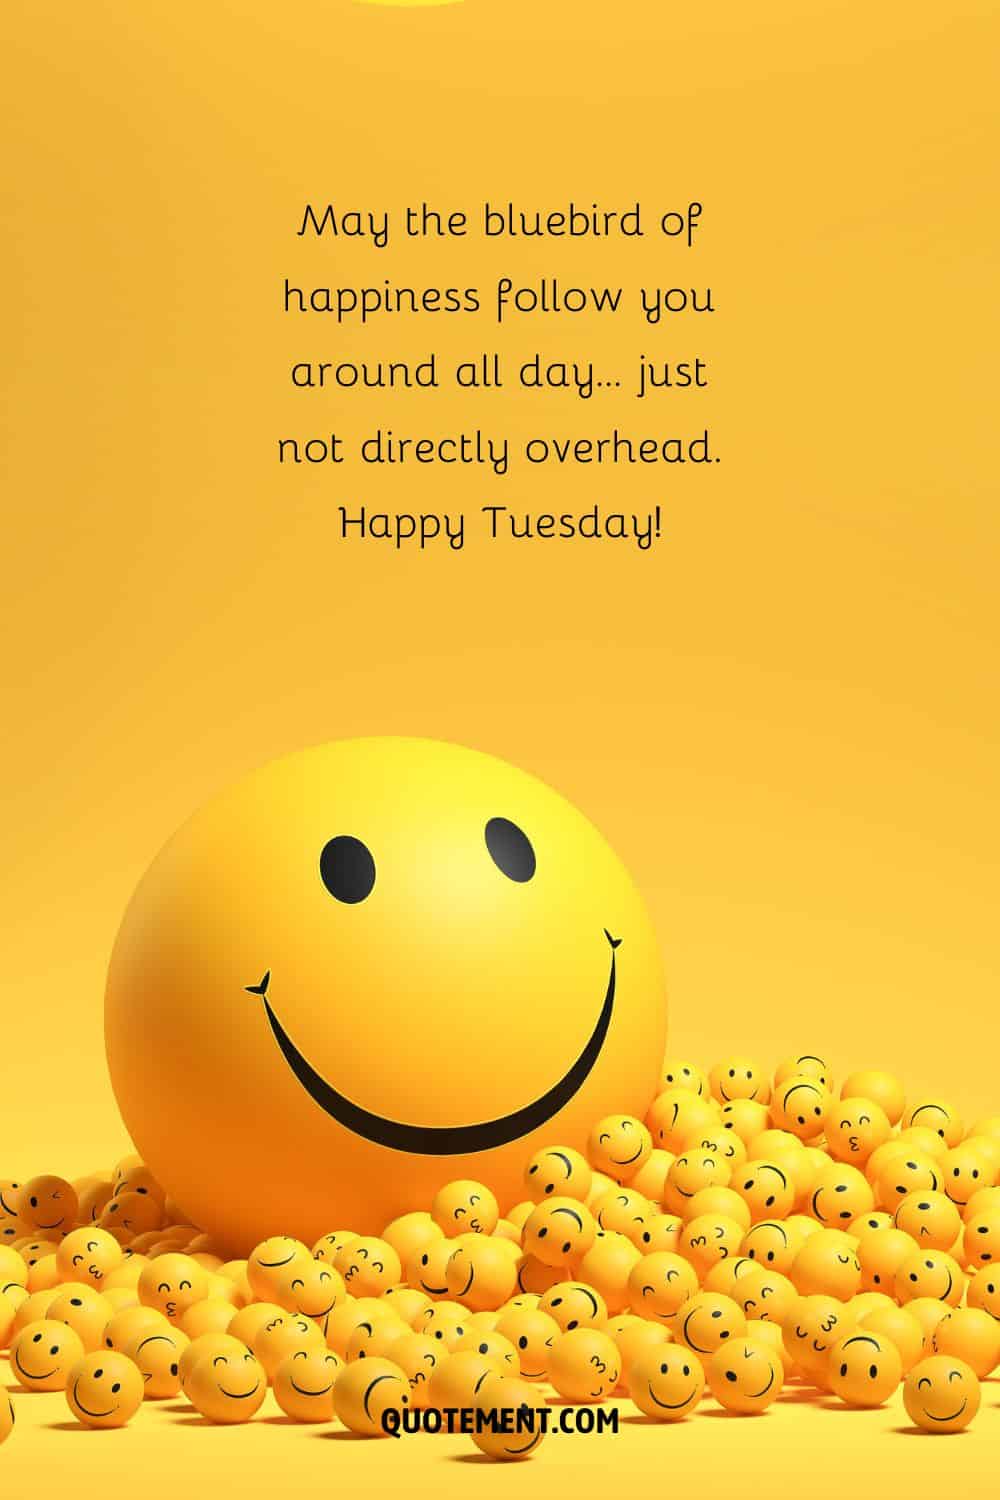 smile emojis image representing positive humorous Tuesday quote